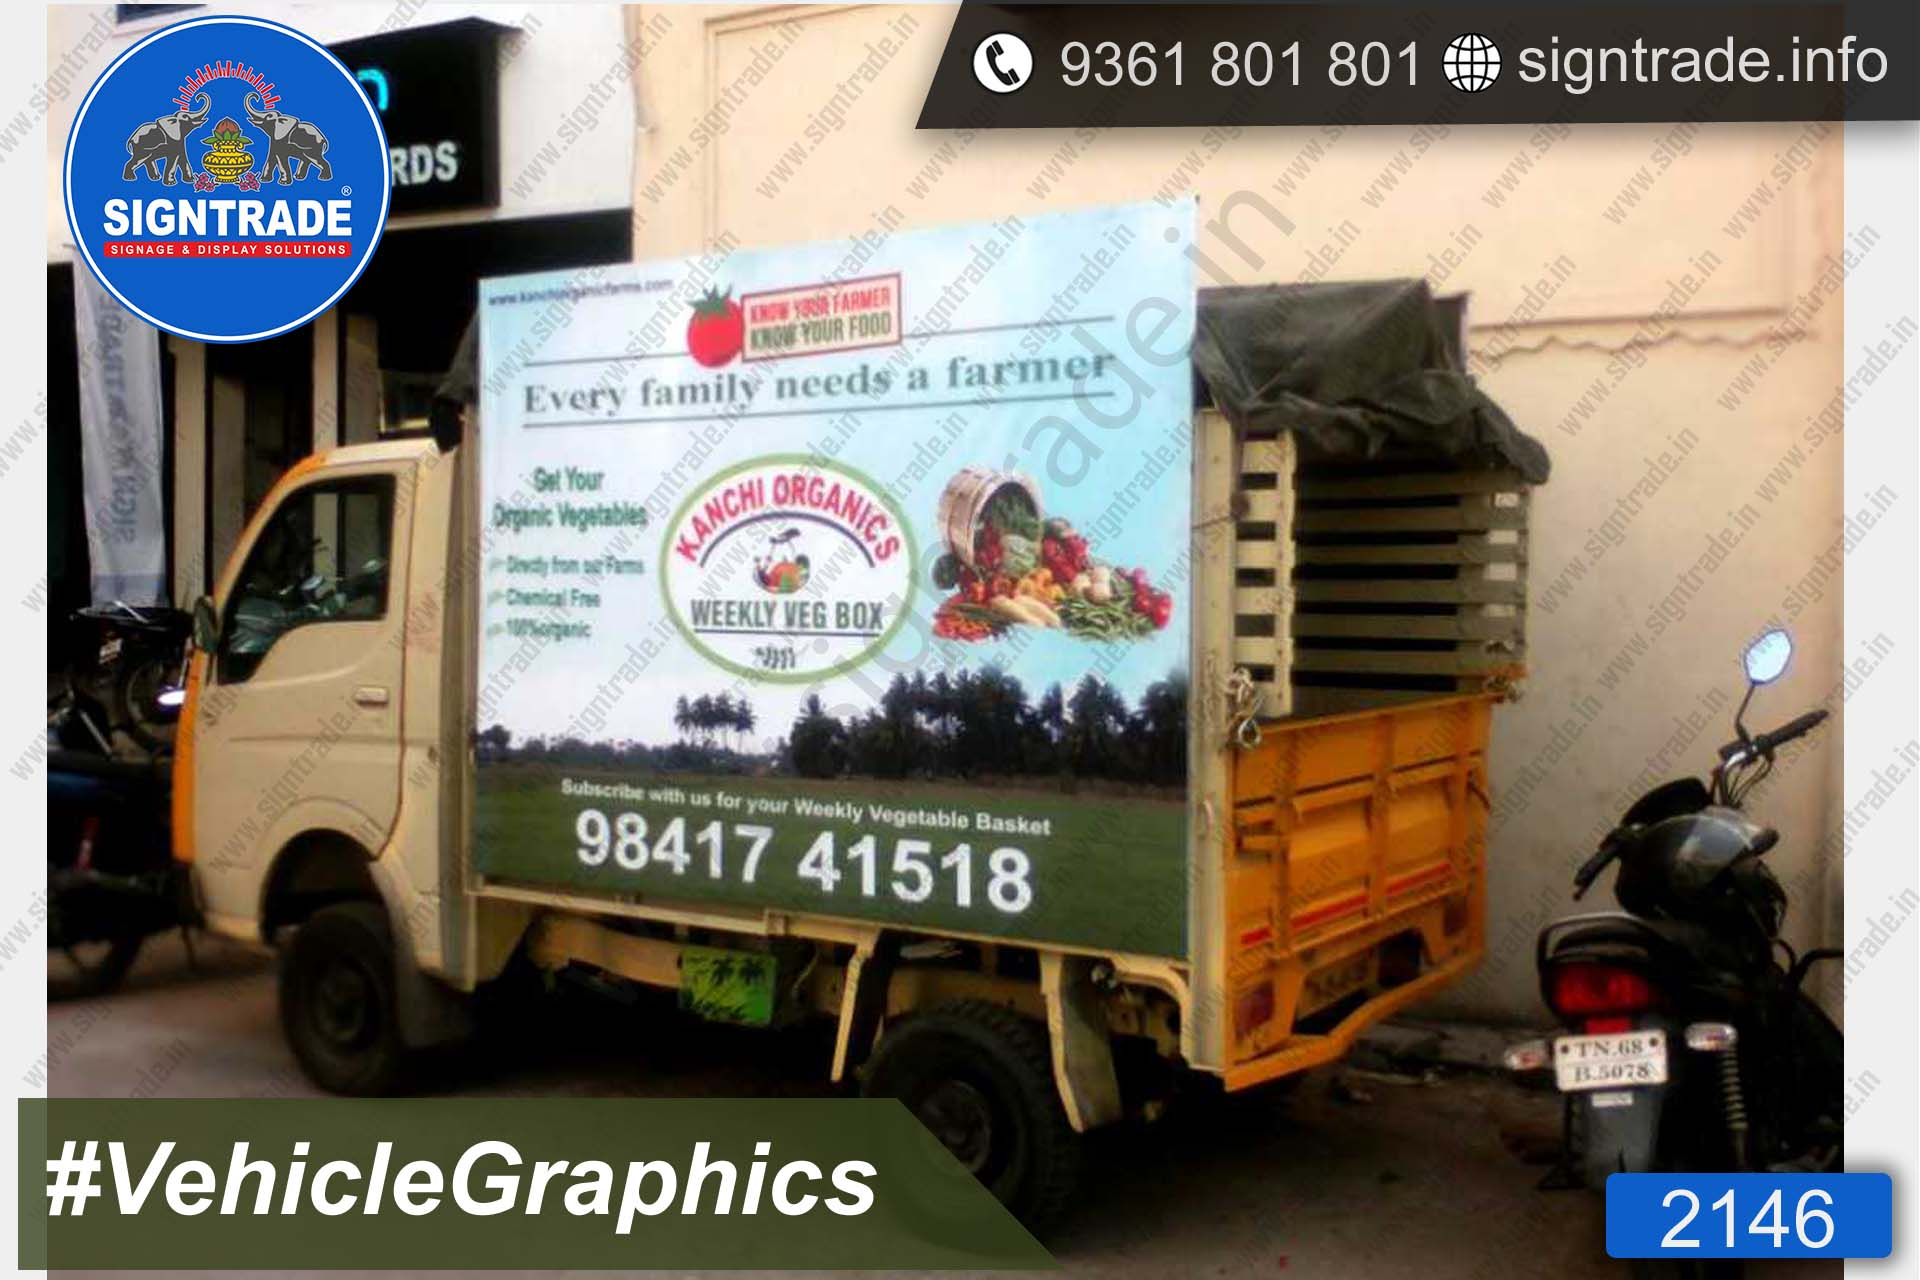 Kanchi Organics Vehicle Graphics